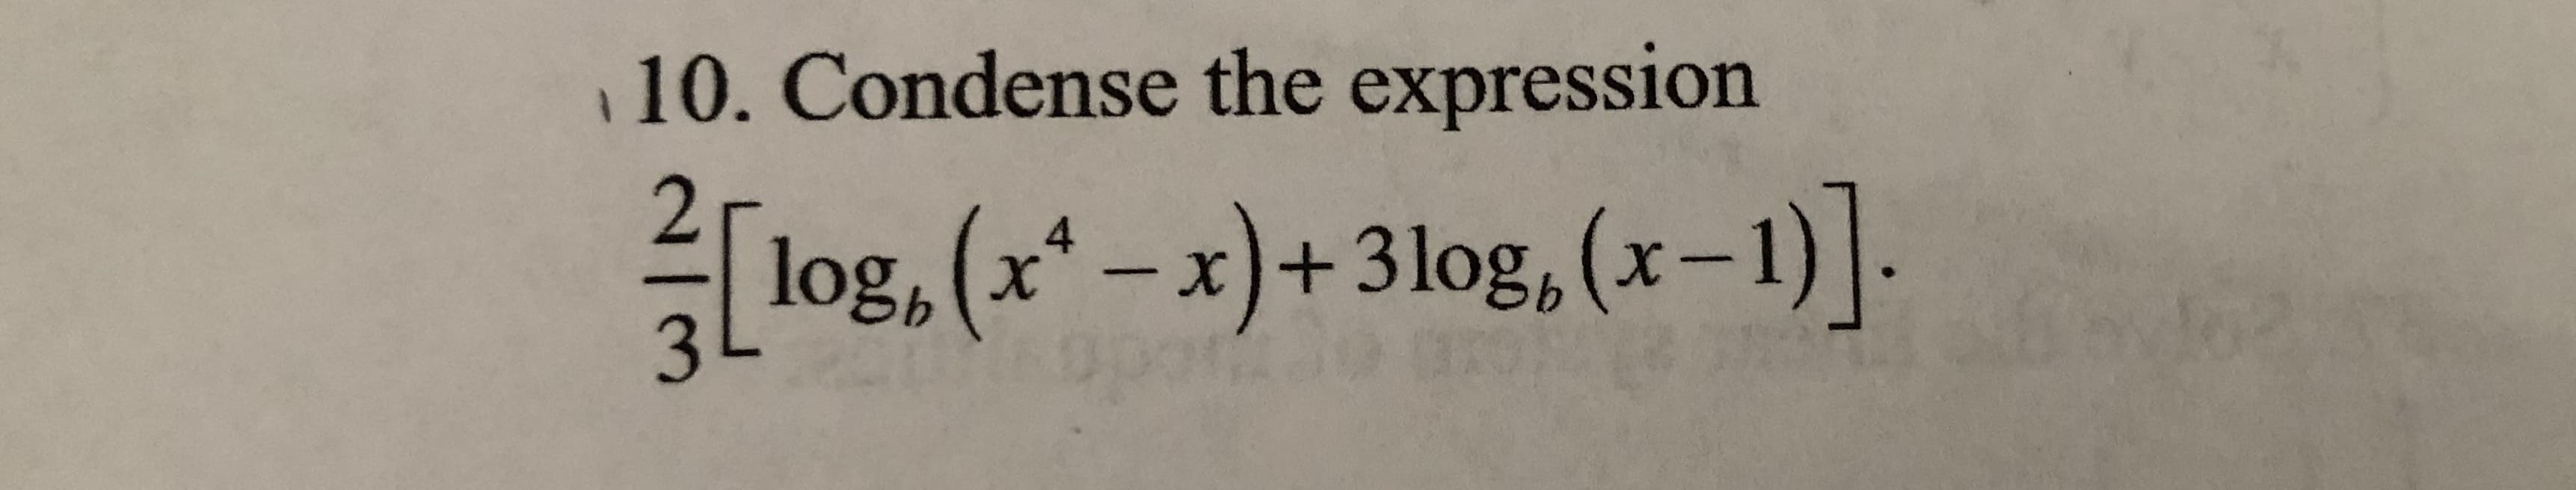 10. Condense the expression
log, (x* – x)+3log, (x-1).
3.
